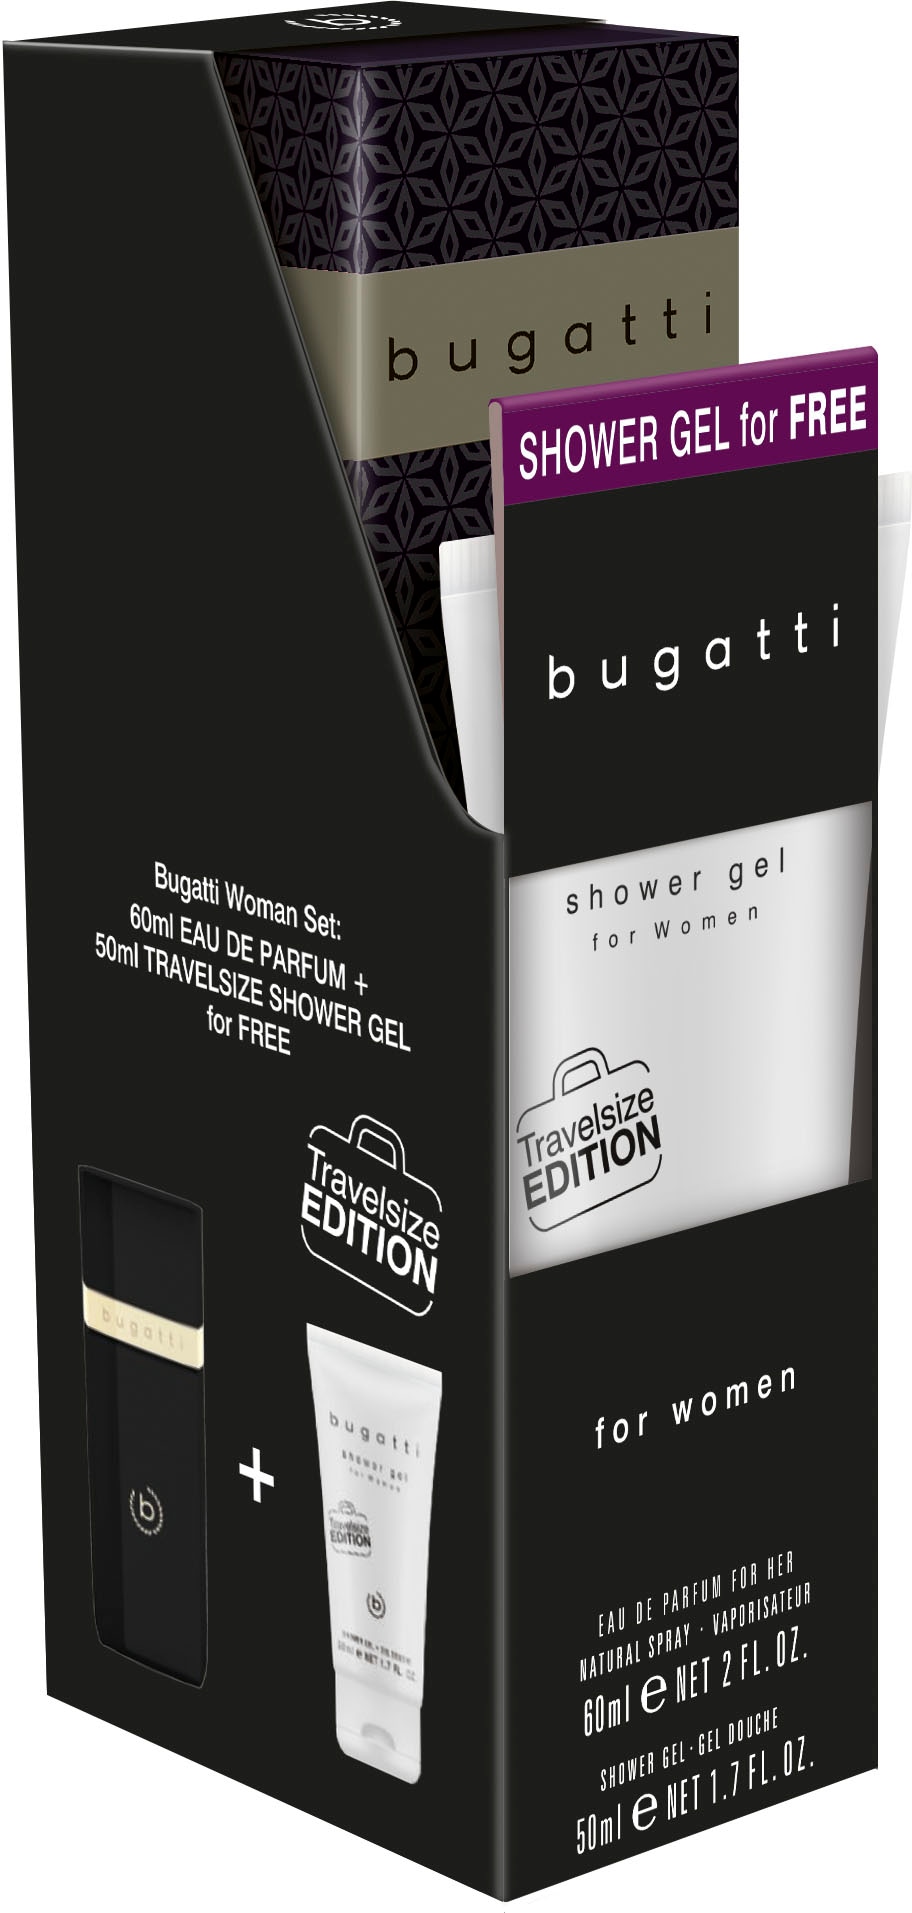 bugatti Eau Bundle«, de 60 (2 EdP 50 Parfum + Eleganza | »Bugatti Duschgel ml ml (gratis) Intensa BAUR tlg.)